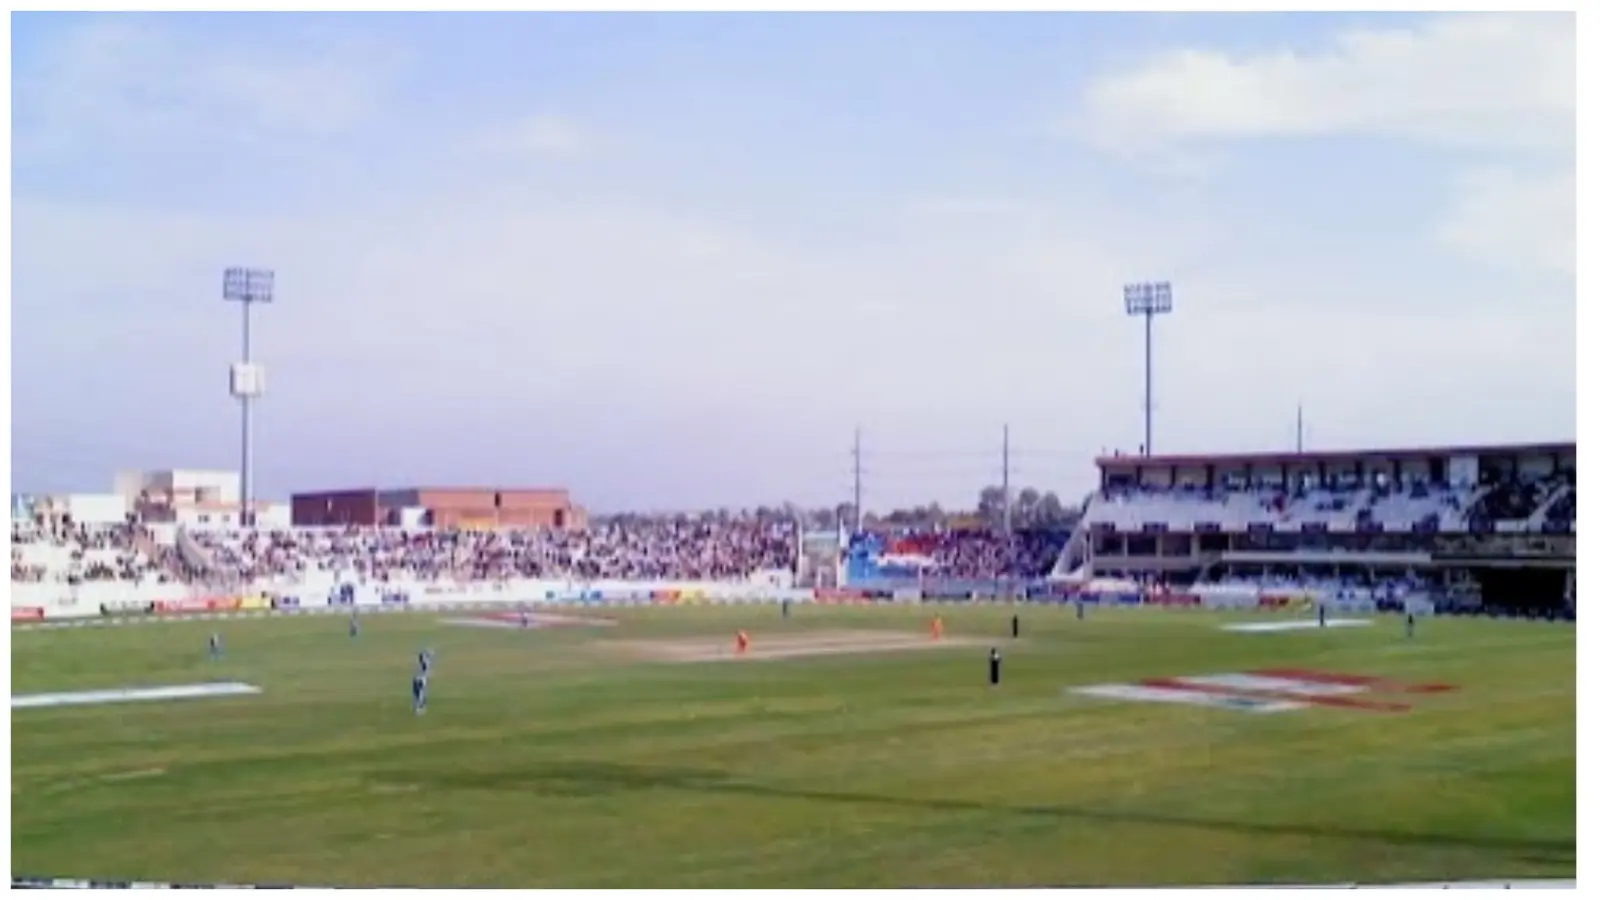 Rawalpindi Cricket Stadium Boundary Length and Seating Capacity